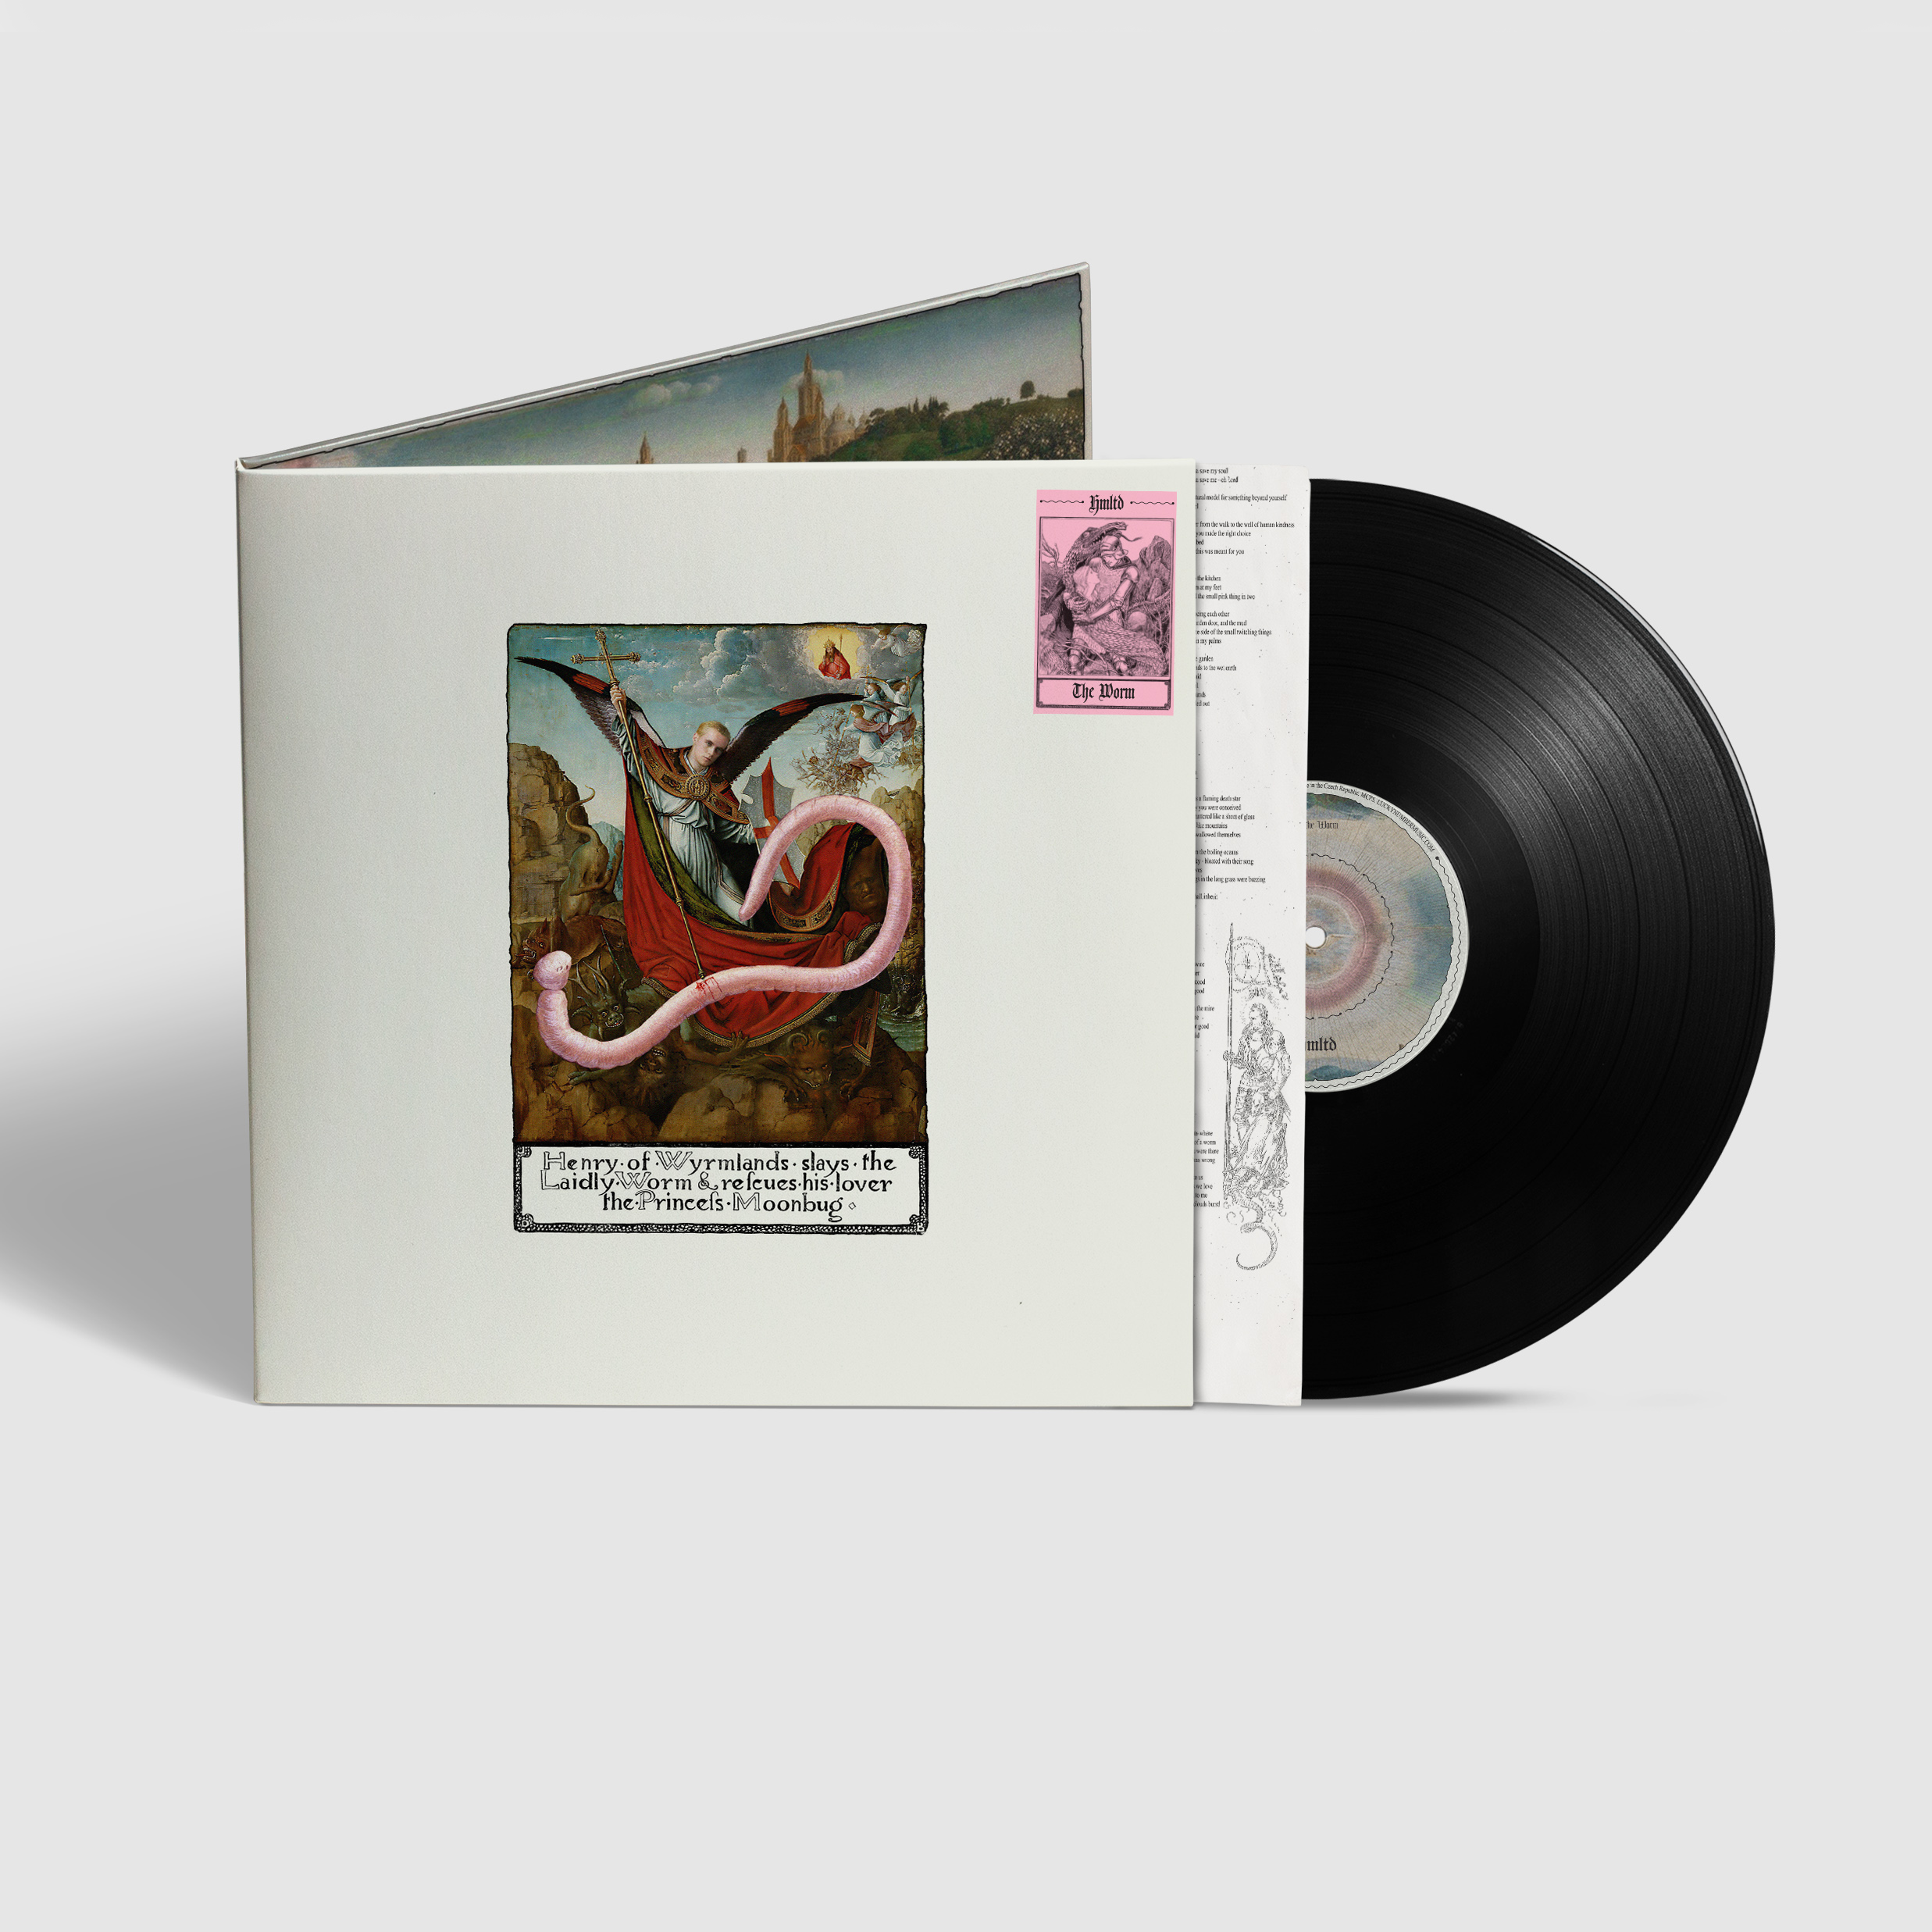 HMLTD - The Worm: Vinyl LP